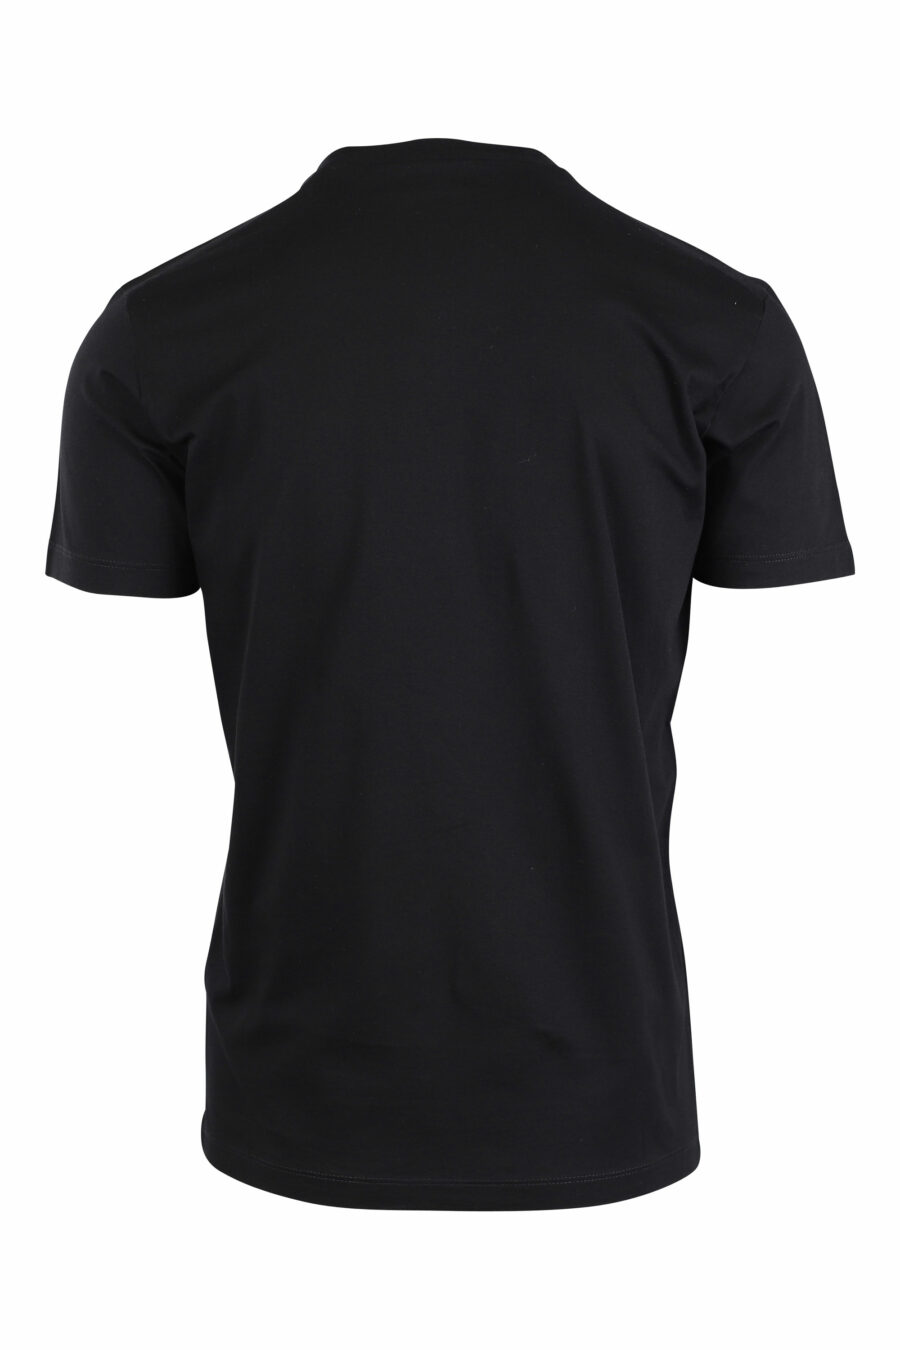 Dsquared2 - Camiseta negra con maxilogo y hoja blanca - BLS Fashion